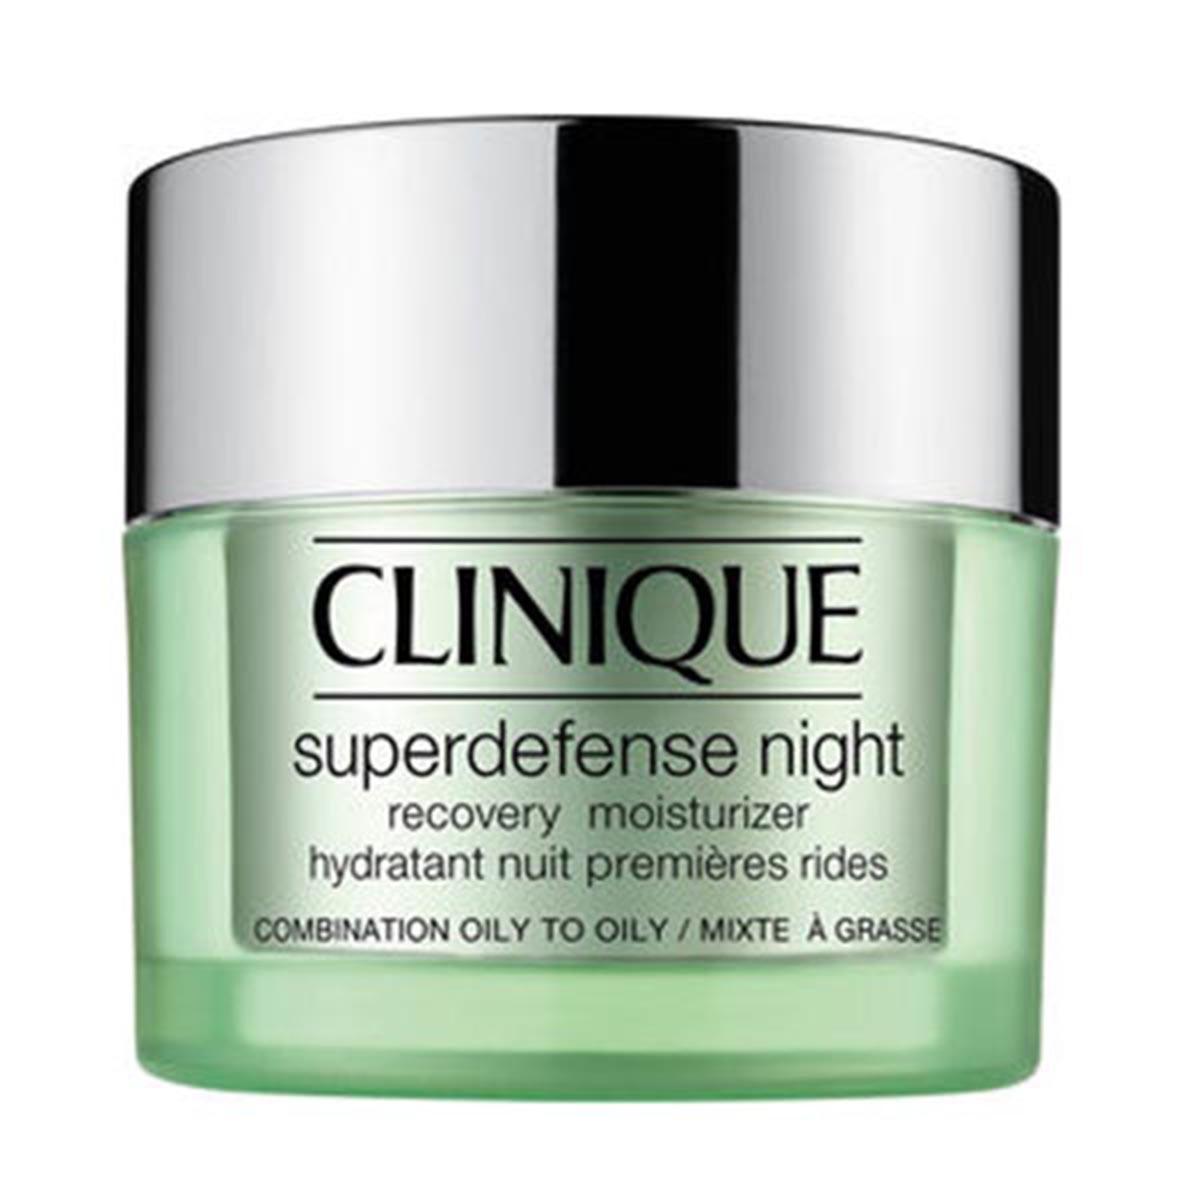 clinique-superdefense-night-recovery-moisturizer-3-4-creme-50ml